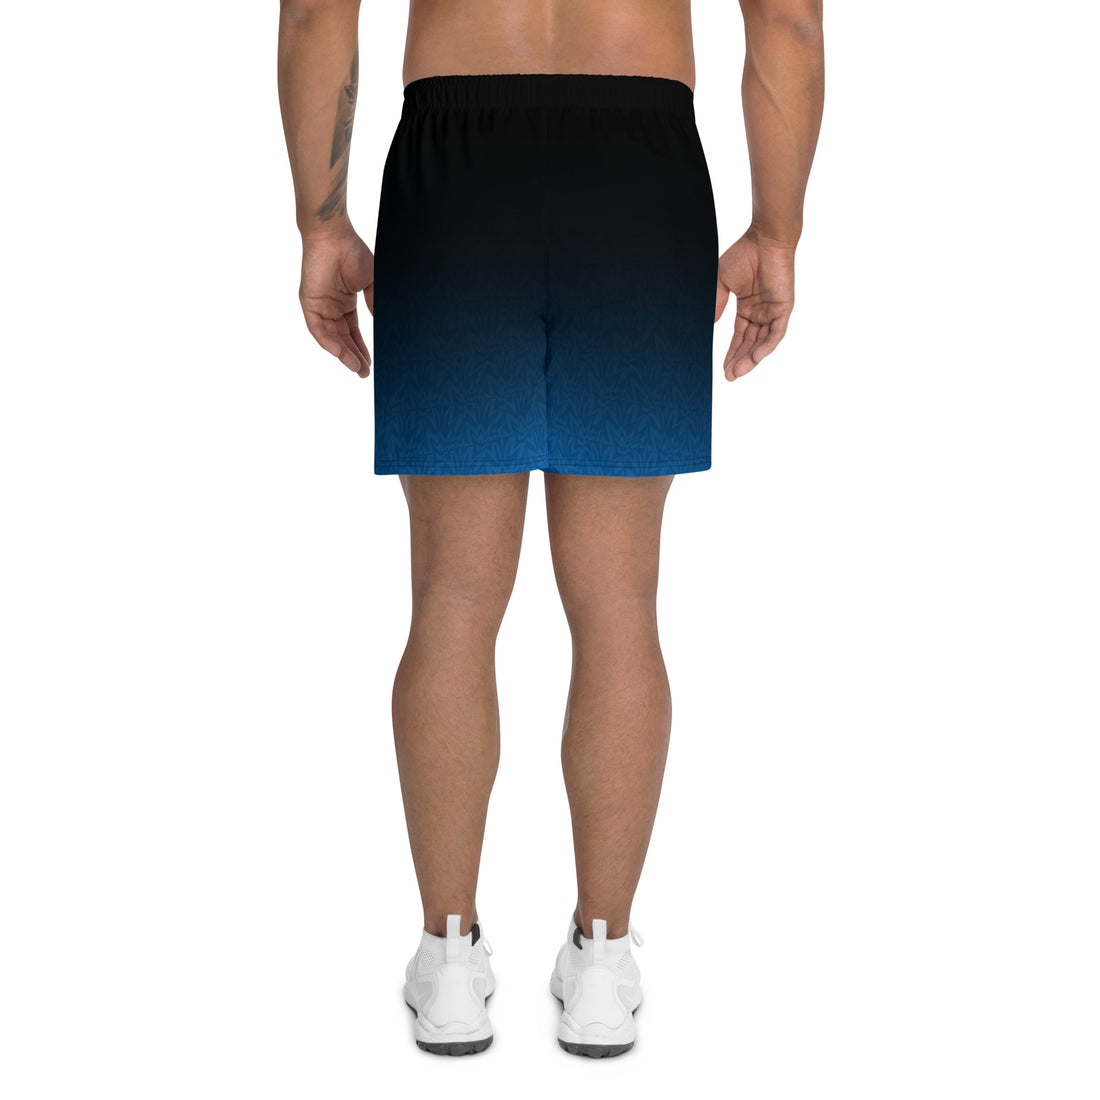 OKC Punishers™ SKYblue™ 2023 Replica Men's Shorts, Black - Turquois Ombre